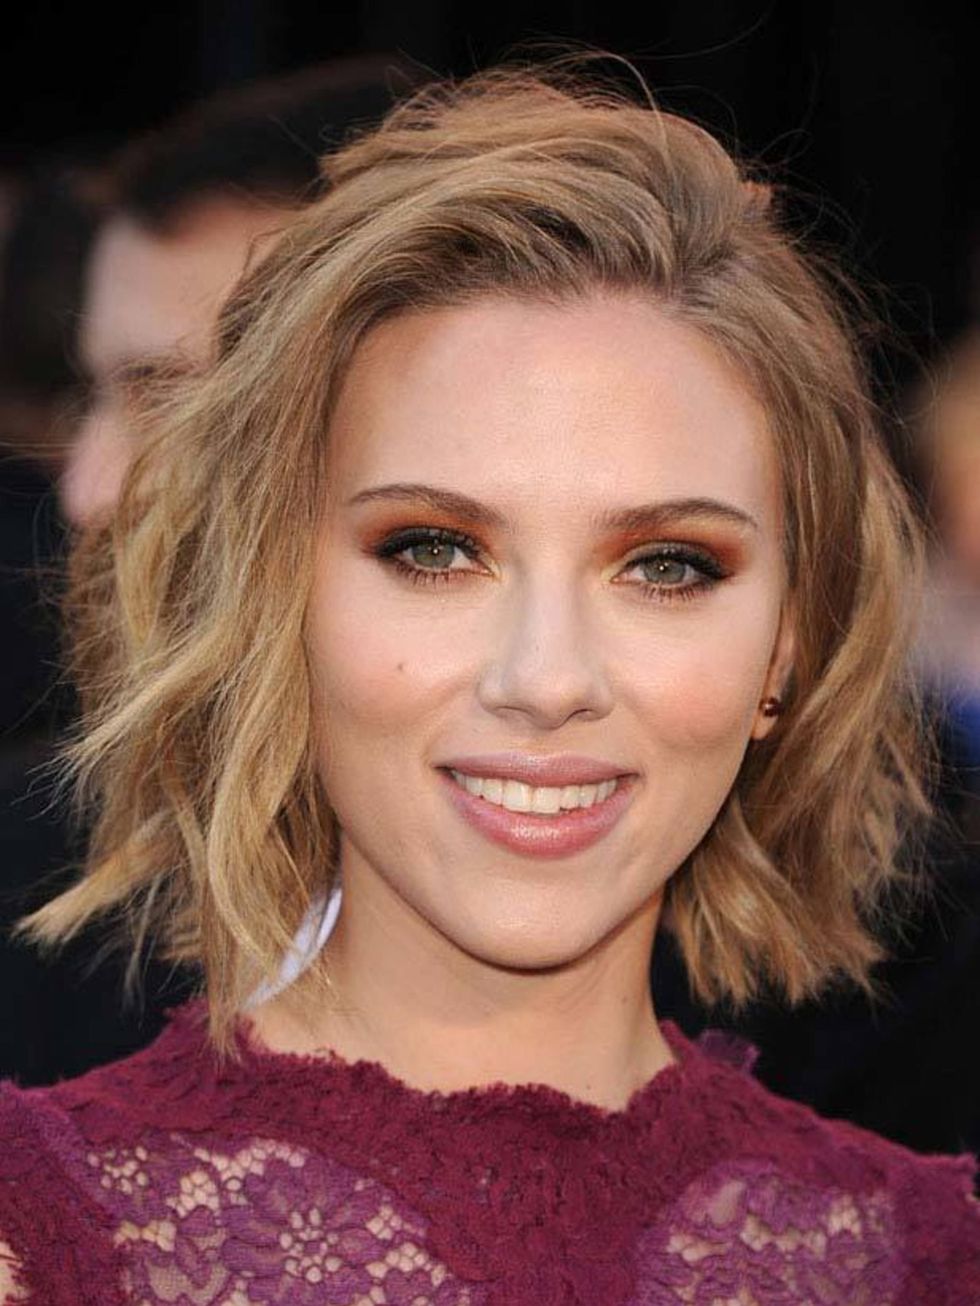 <p><a href="http://www.elleuk.com/starstyle/style-files/(section)/Scarlett-Johansson">Scarlett Johansson</a>, 83rd Academy Awards, Hollywood, February 2011</p>